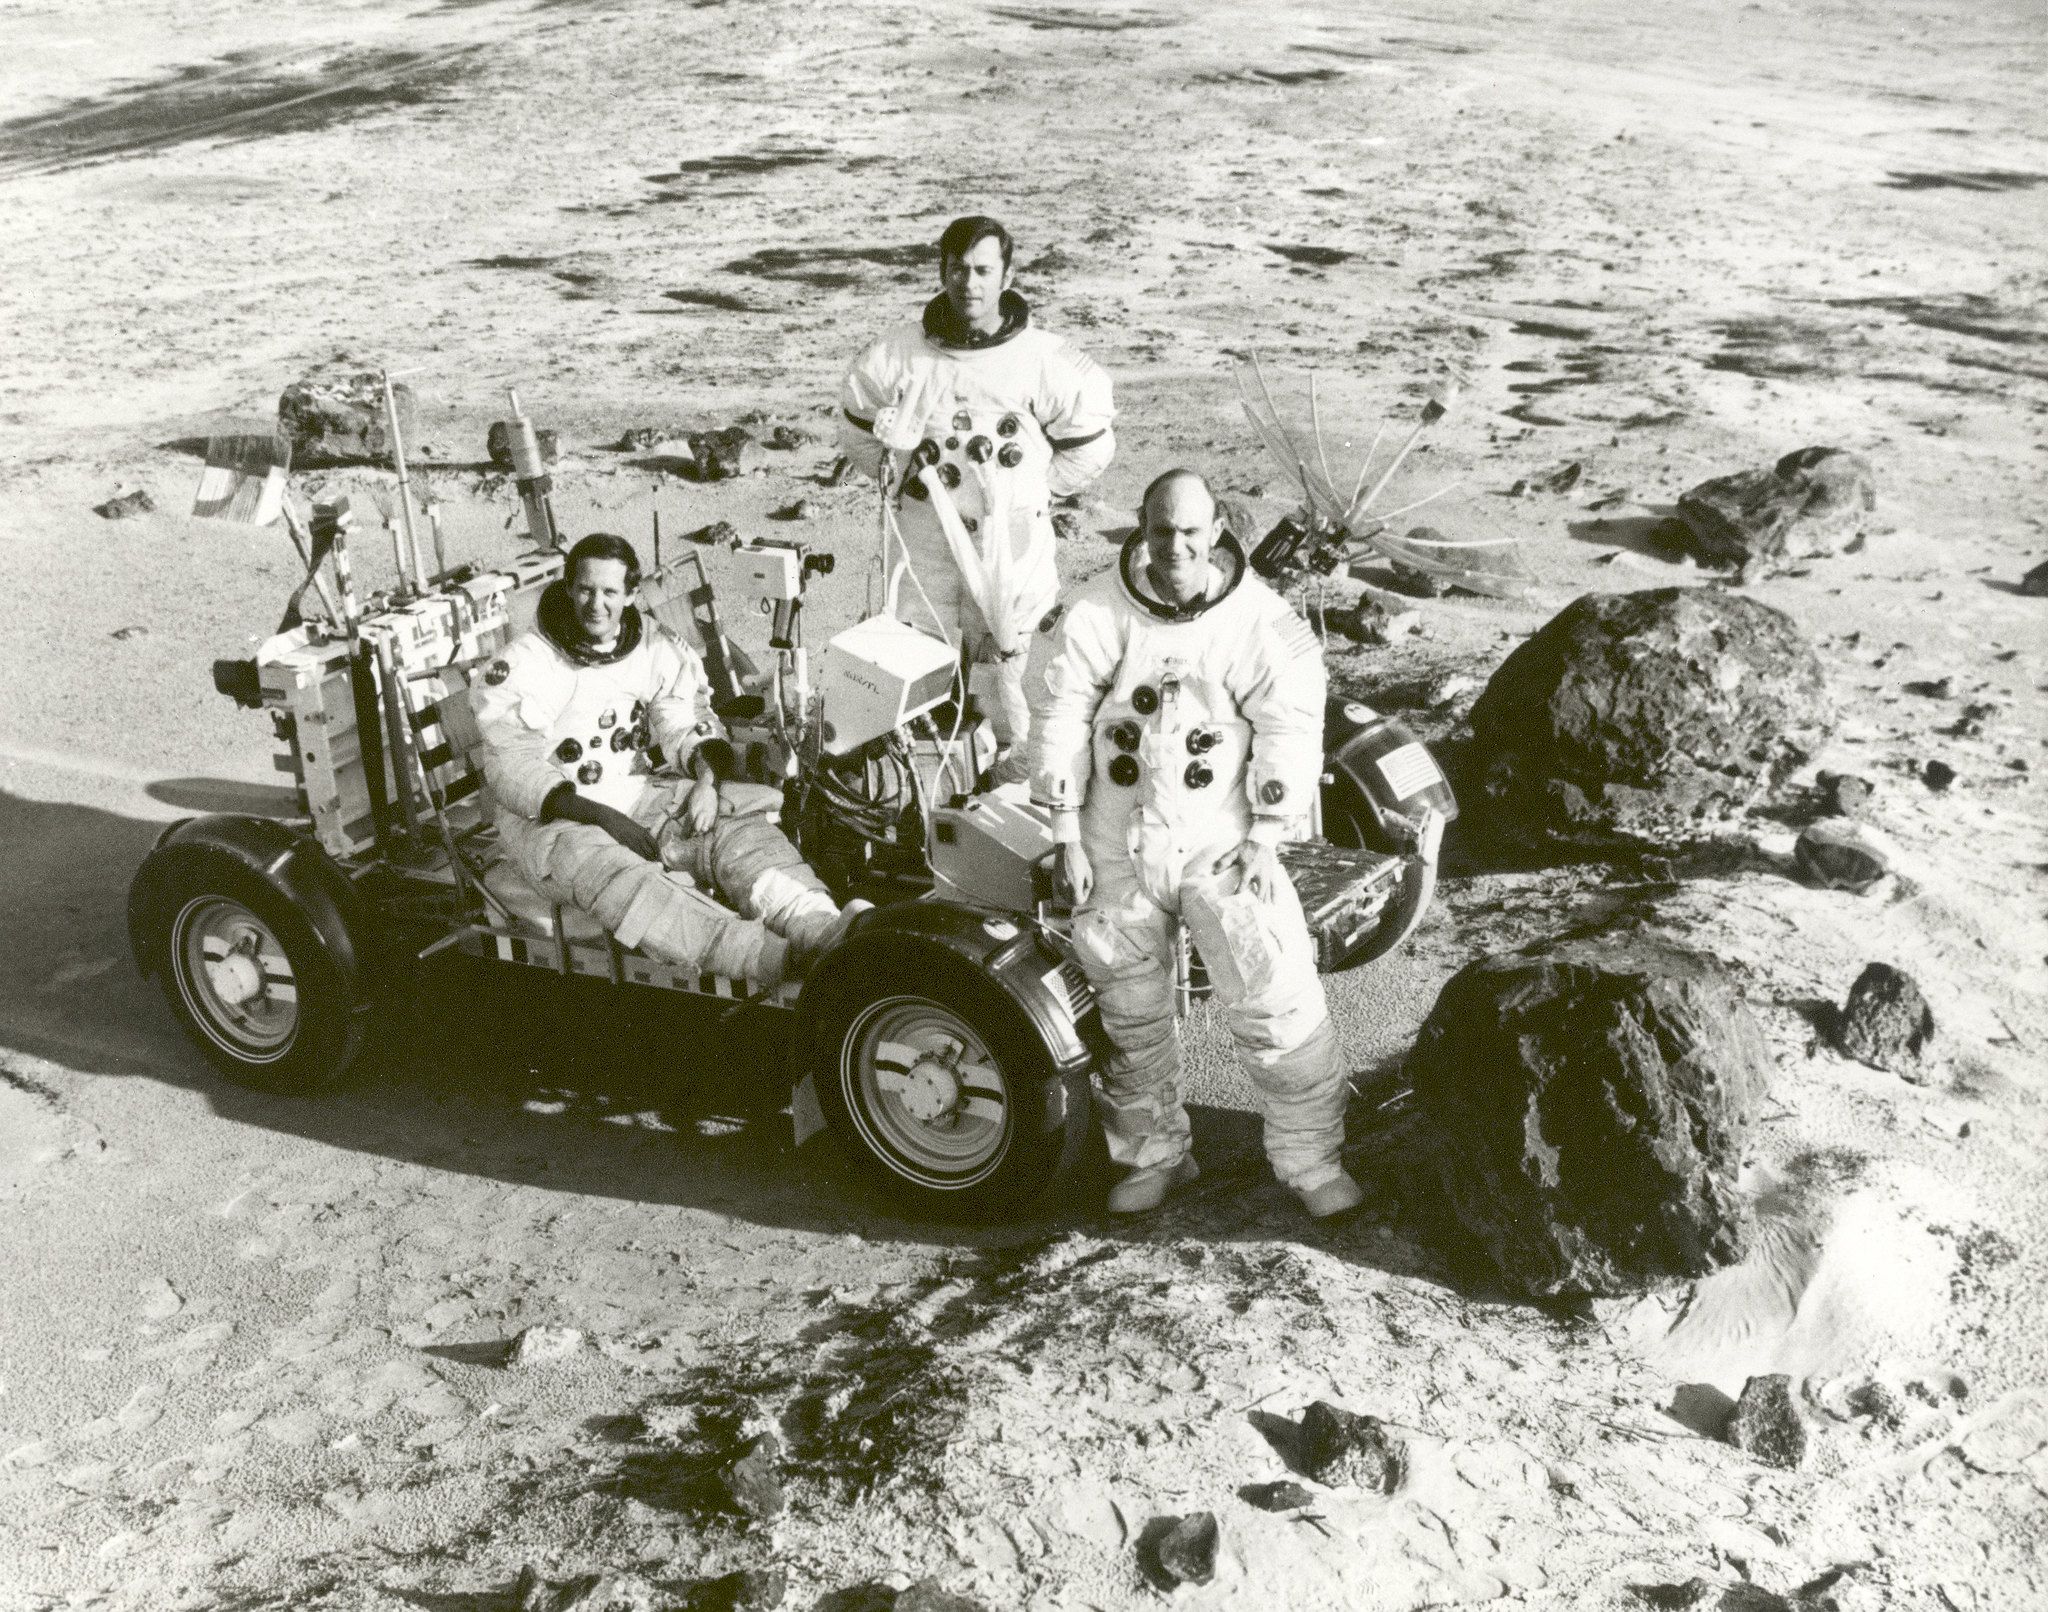 Apollo 16 Astronauts Train for Lunar Landing Mission (Public Domain - NASA)